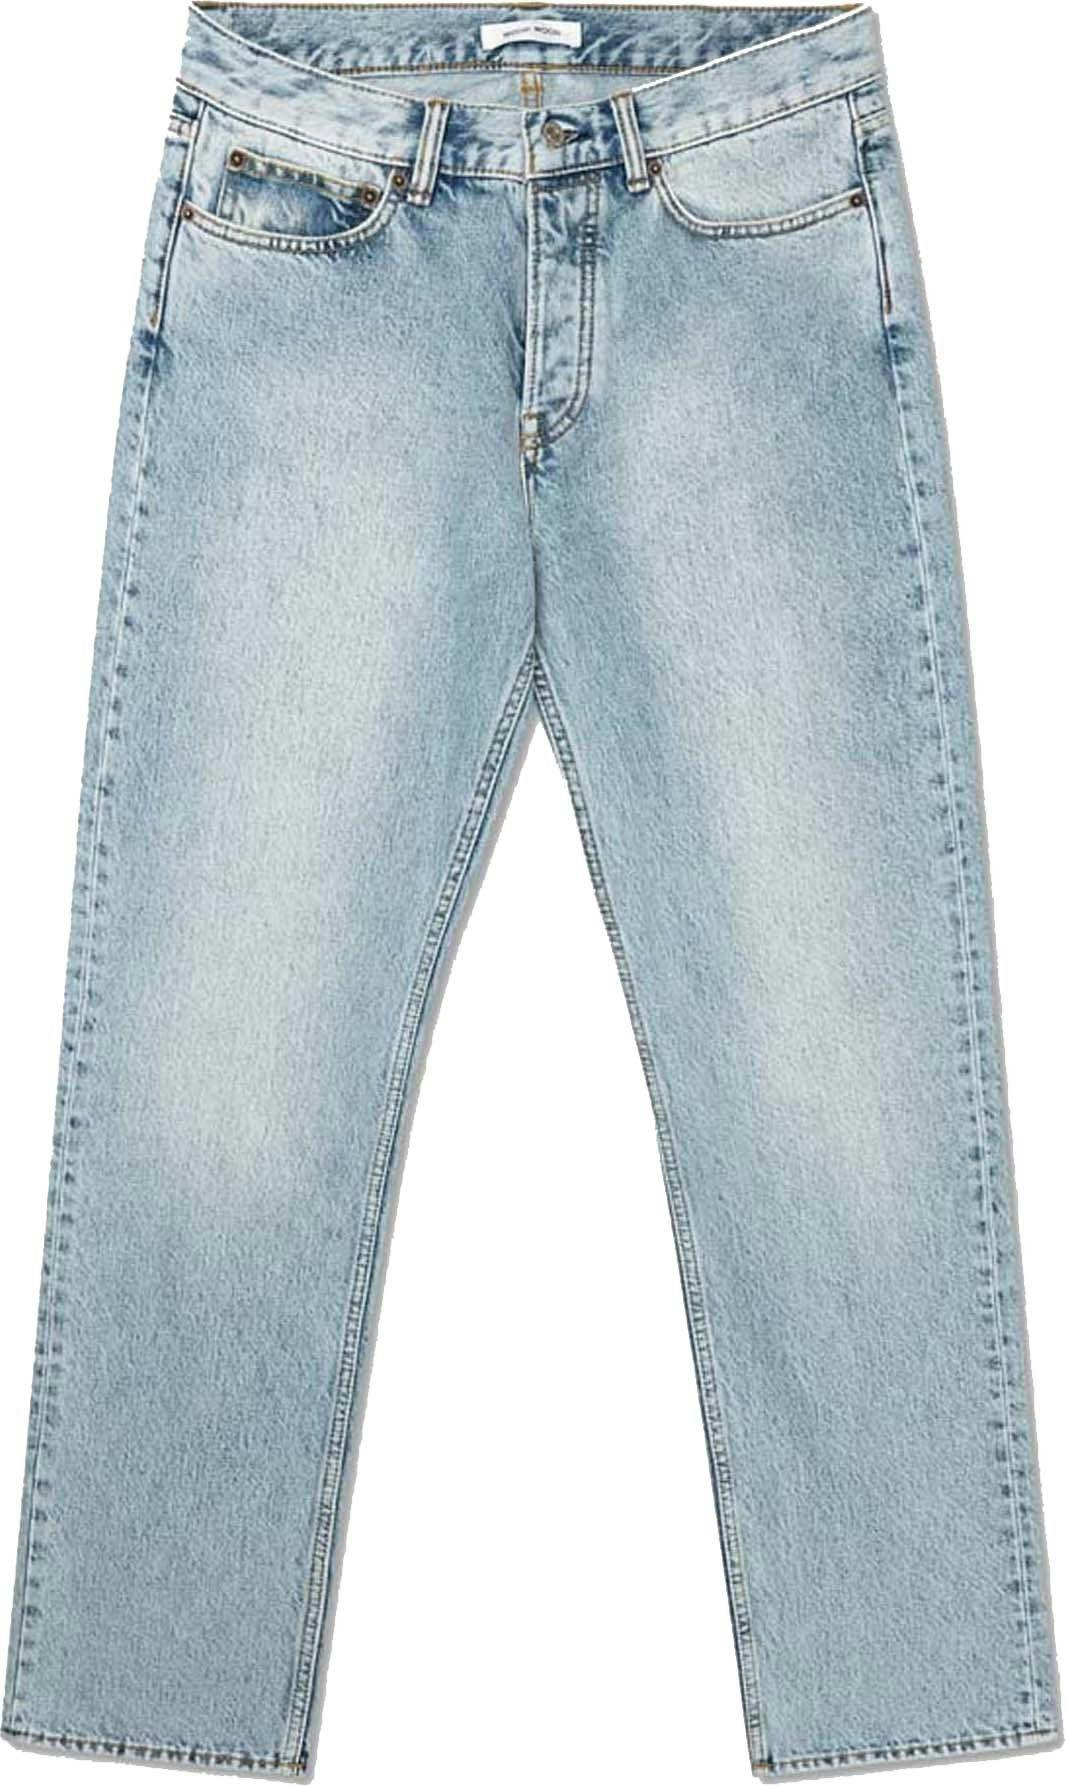 Product image for Sol Rigid Denim Slim Fit Jeans - Men's